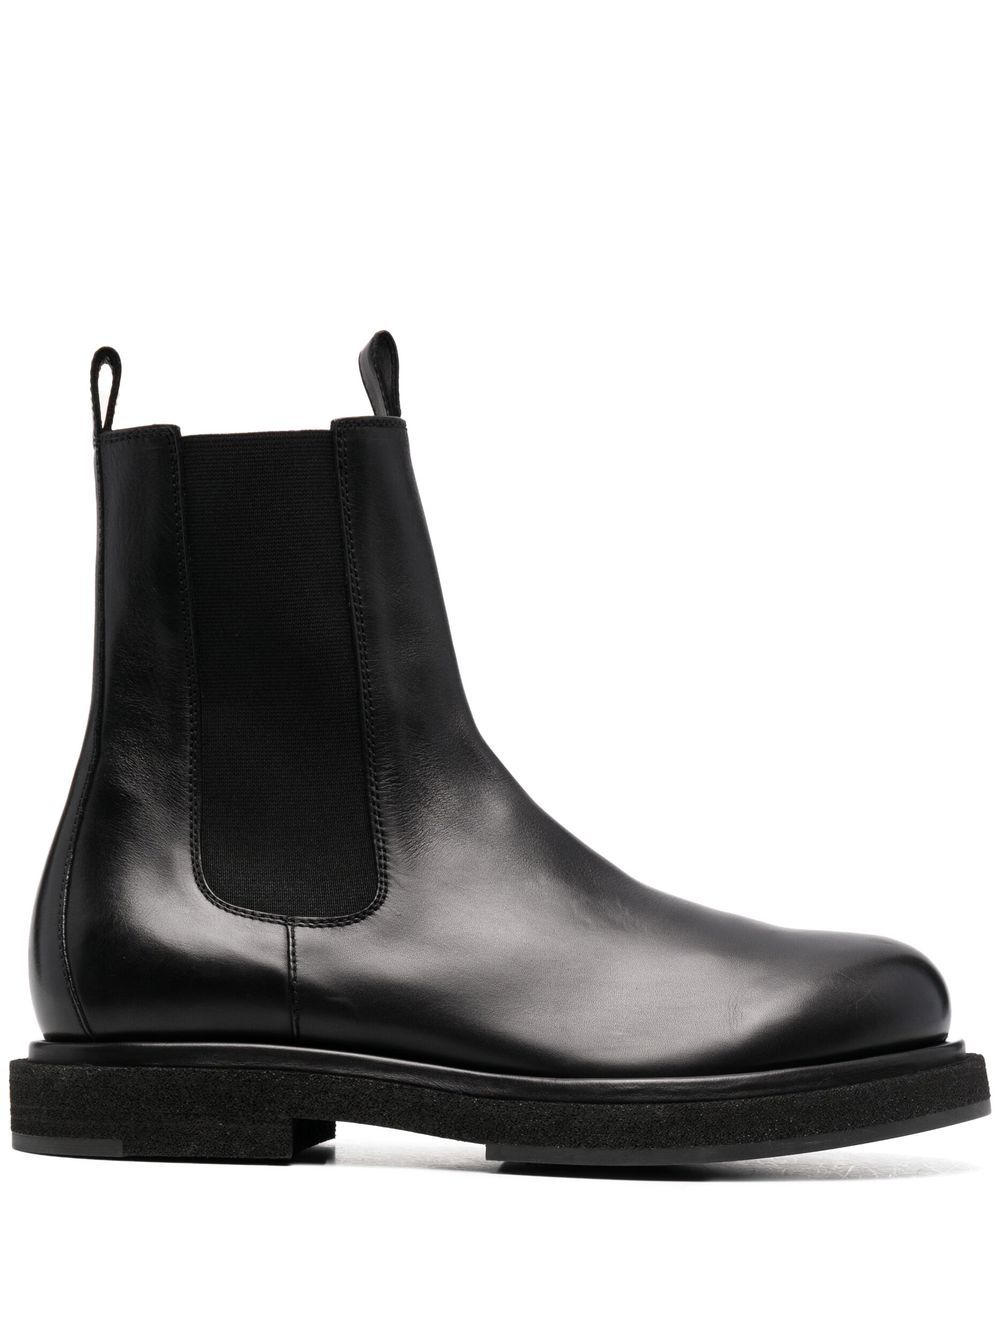 Officine Creative Tonal leather boots - Black von Officine Creative